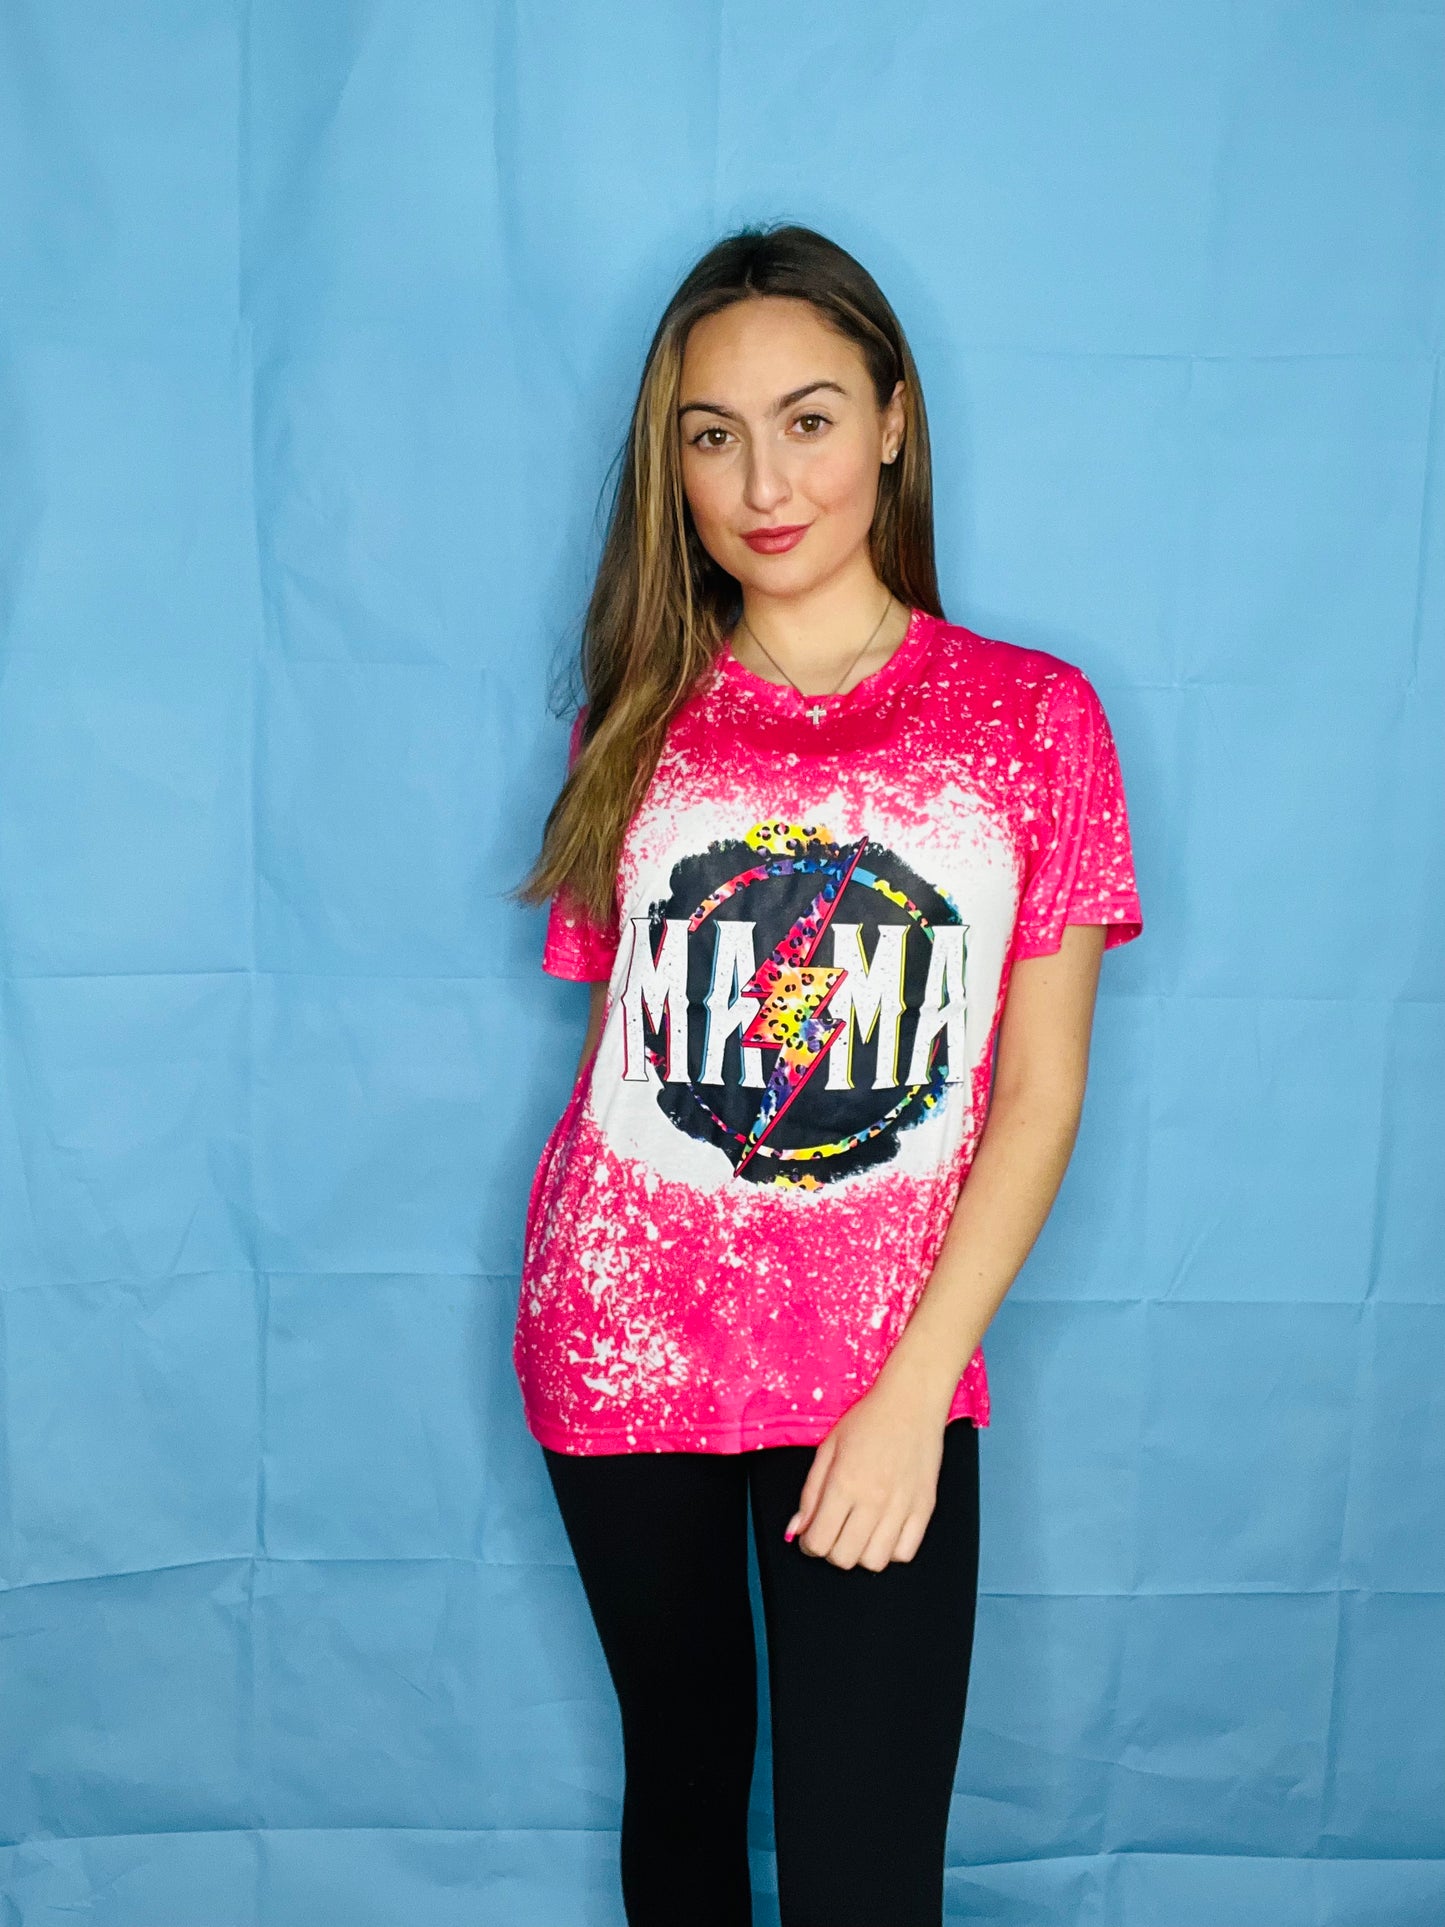 Mama T-Shirt